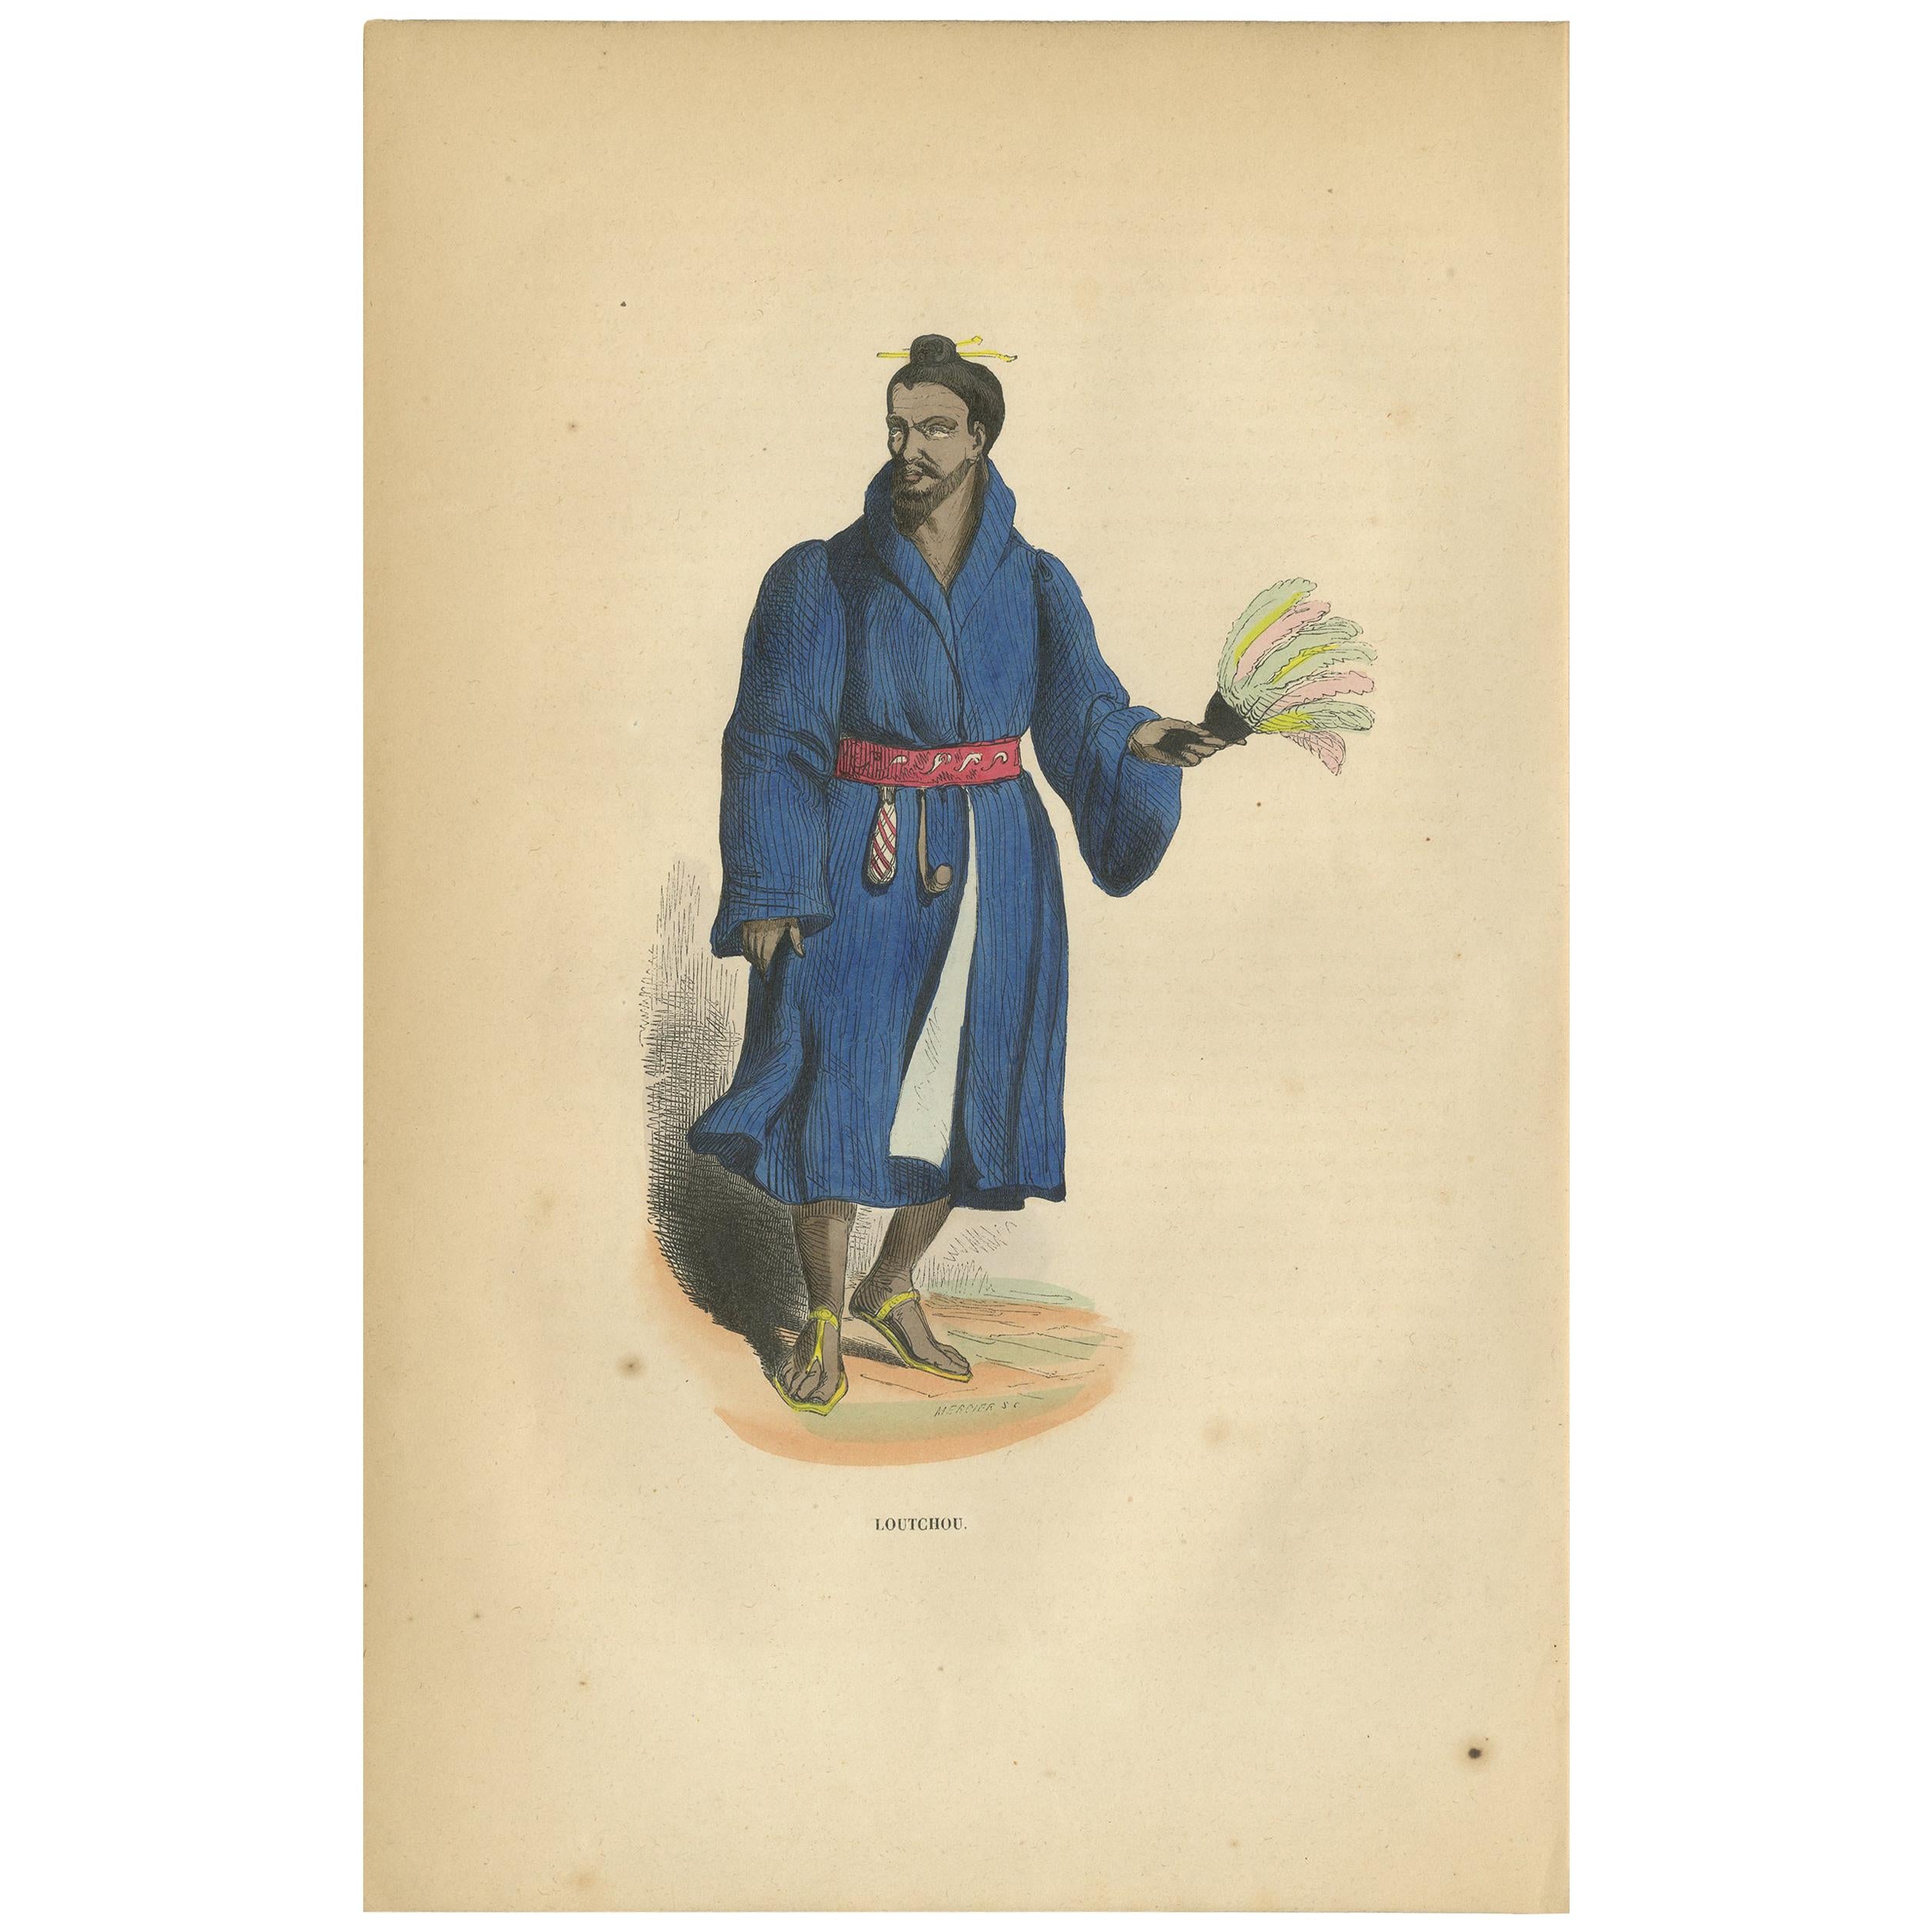 Print of a Man of the Lou-Tchou Islands (RyuKyu Islands or now Okinawa), Japan